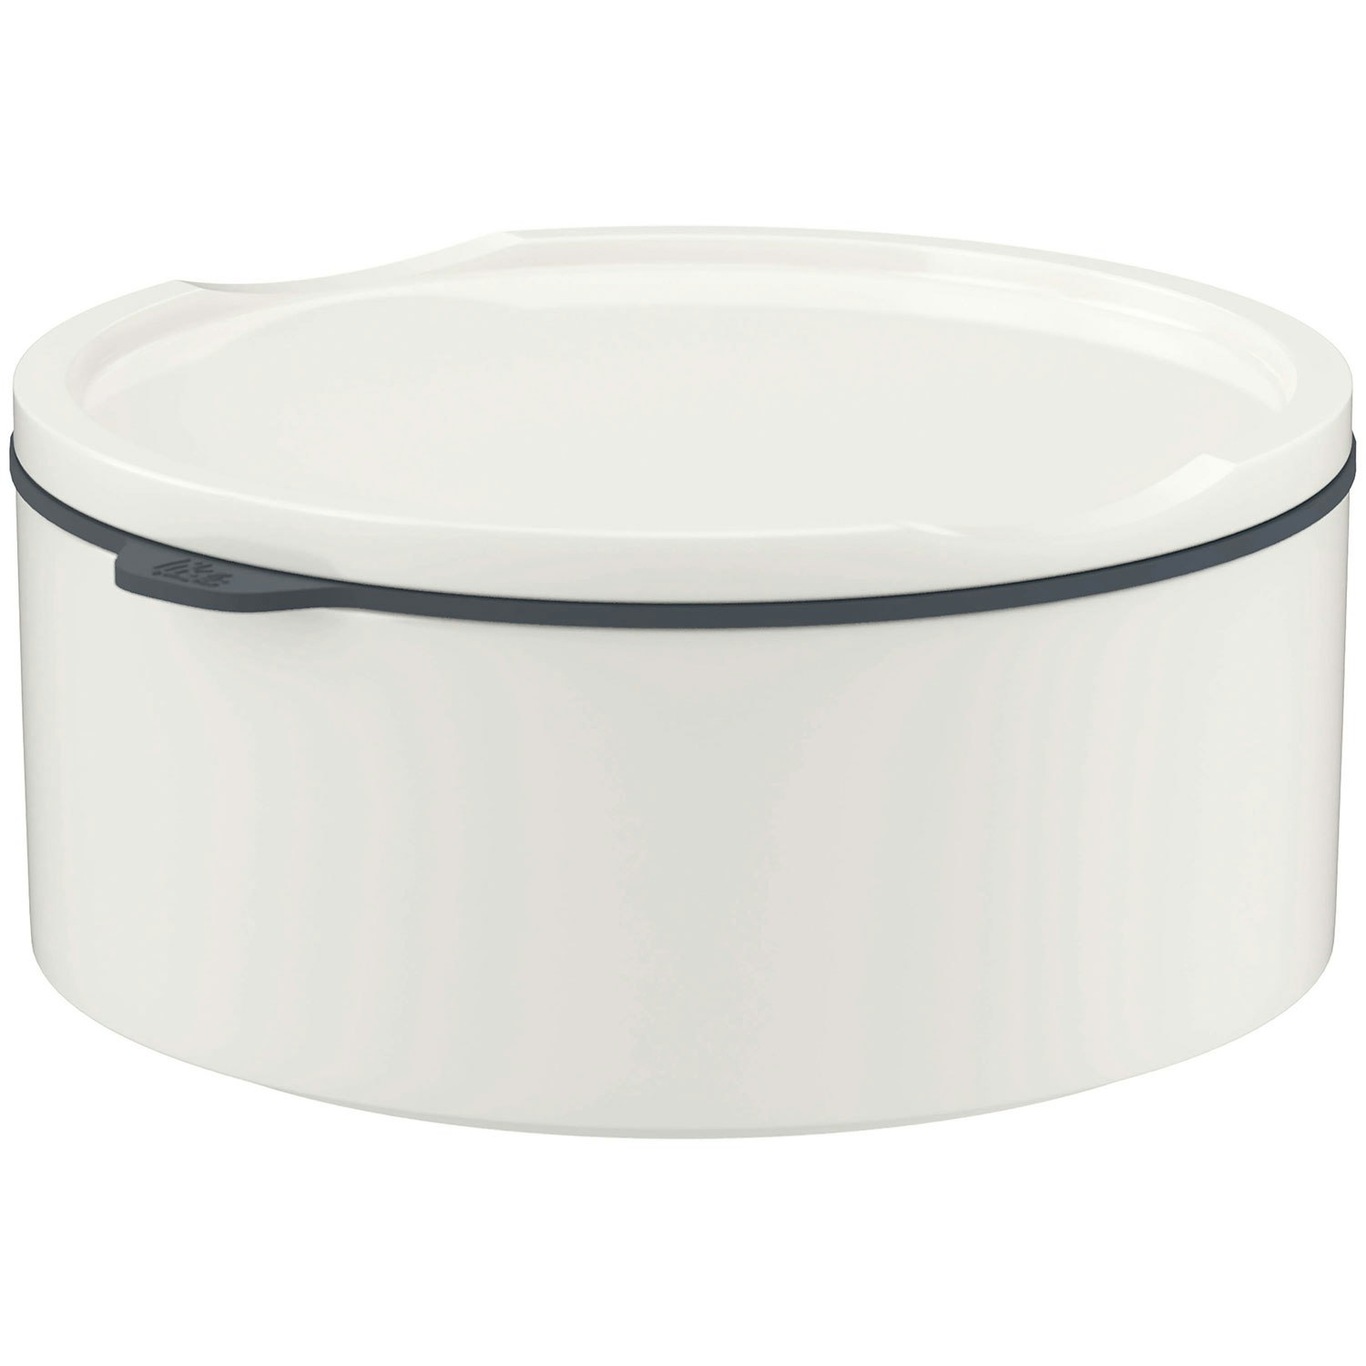 https://royaldesign.com/image/2/villeroy-boch-togotostay-lunch-box-white-13x6-cm-0?w=800&quality=80